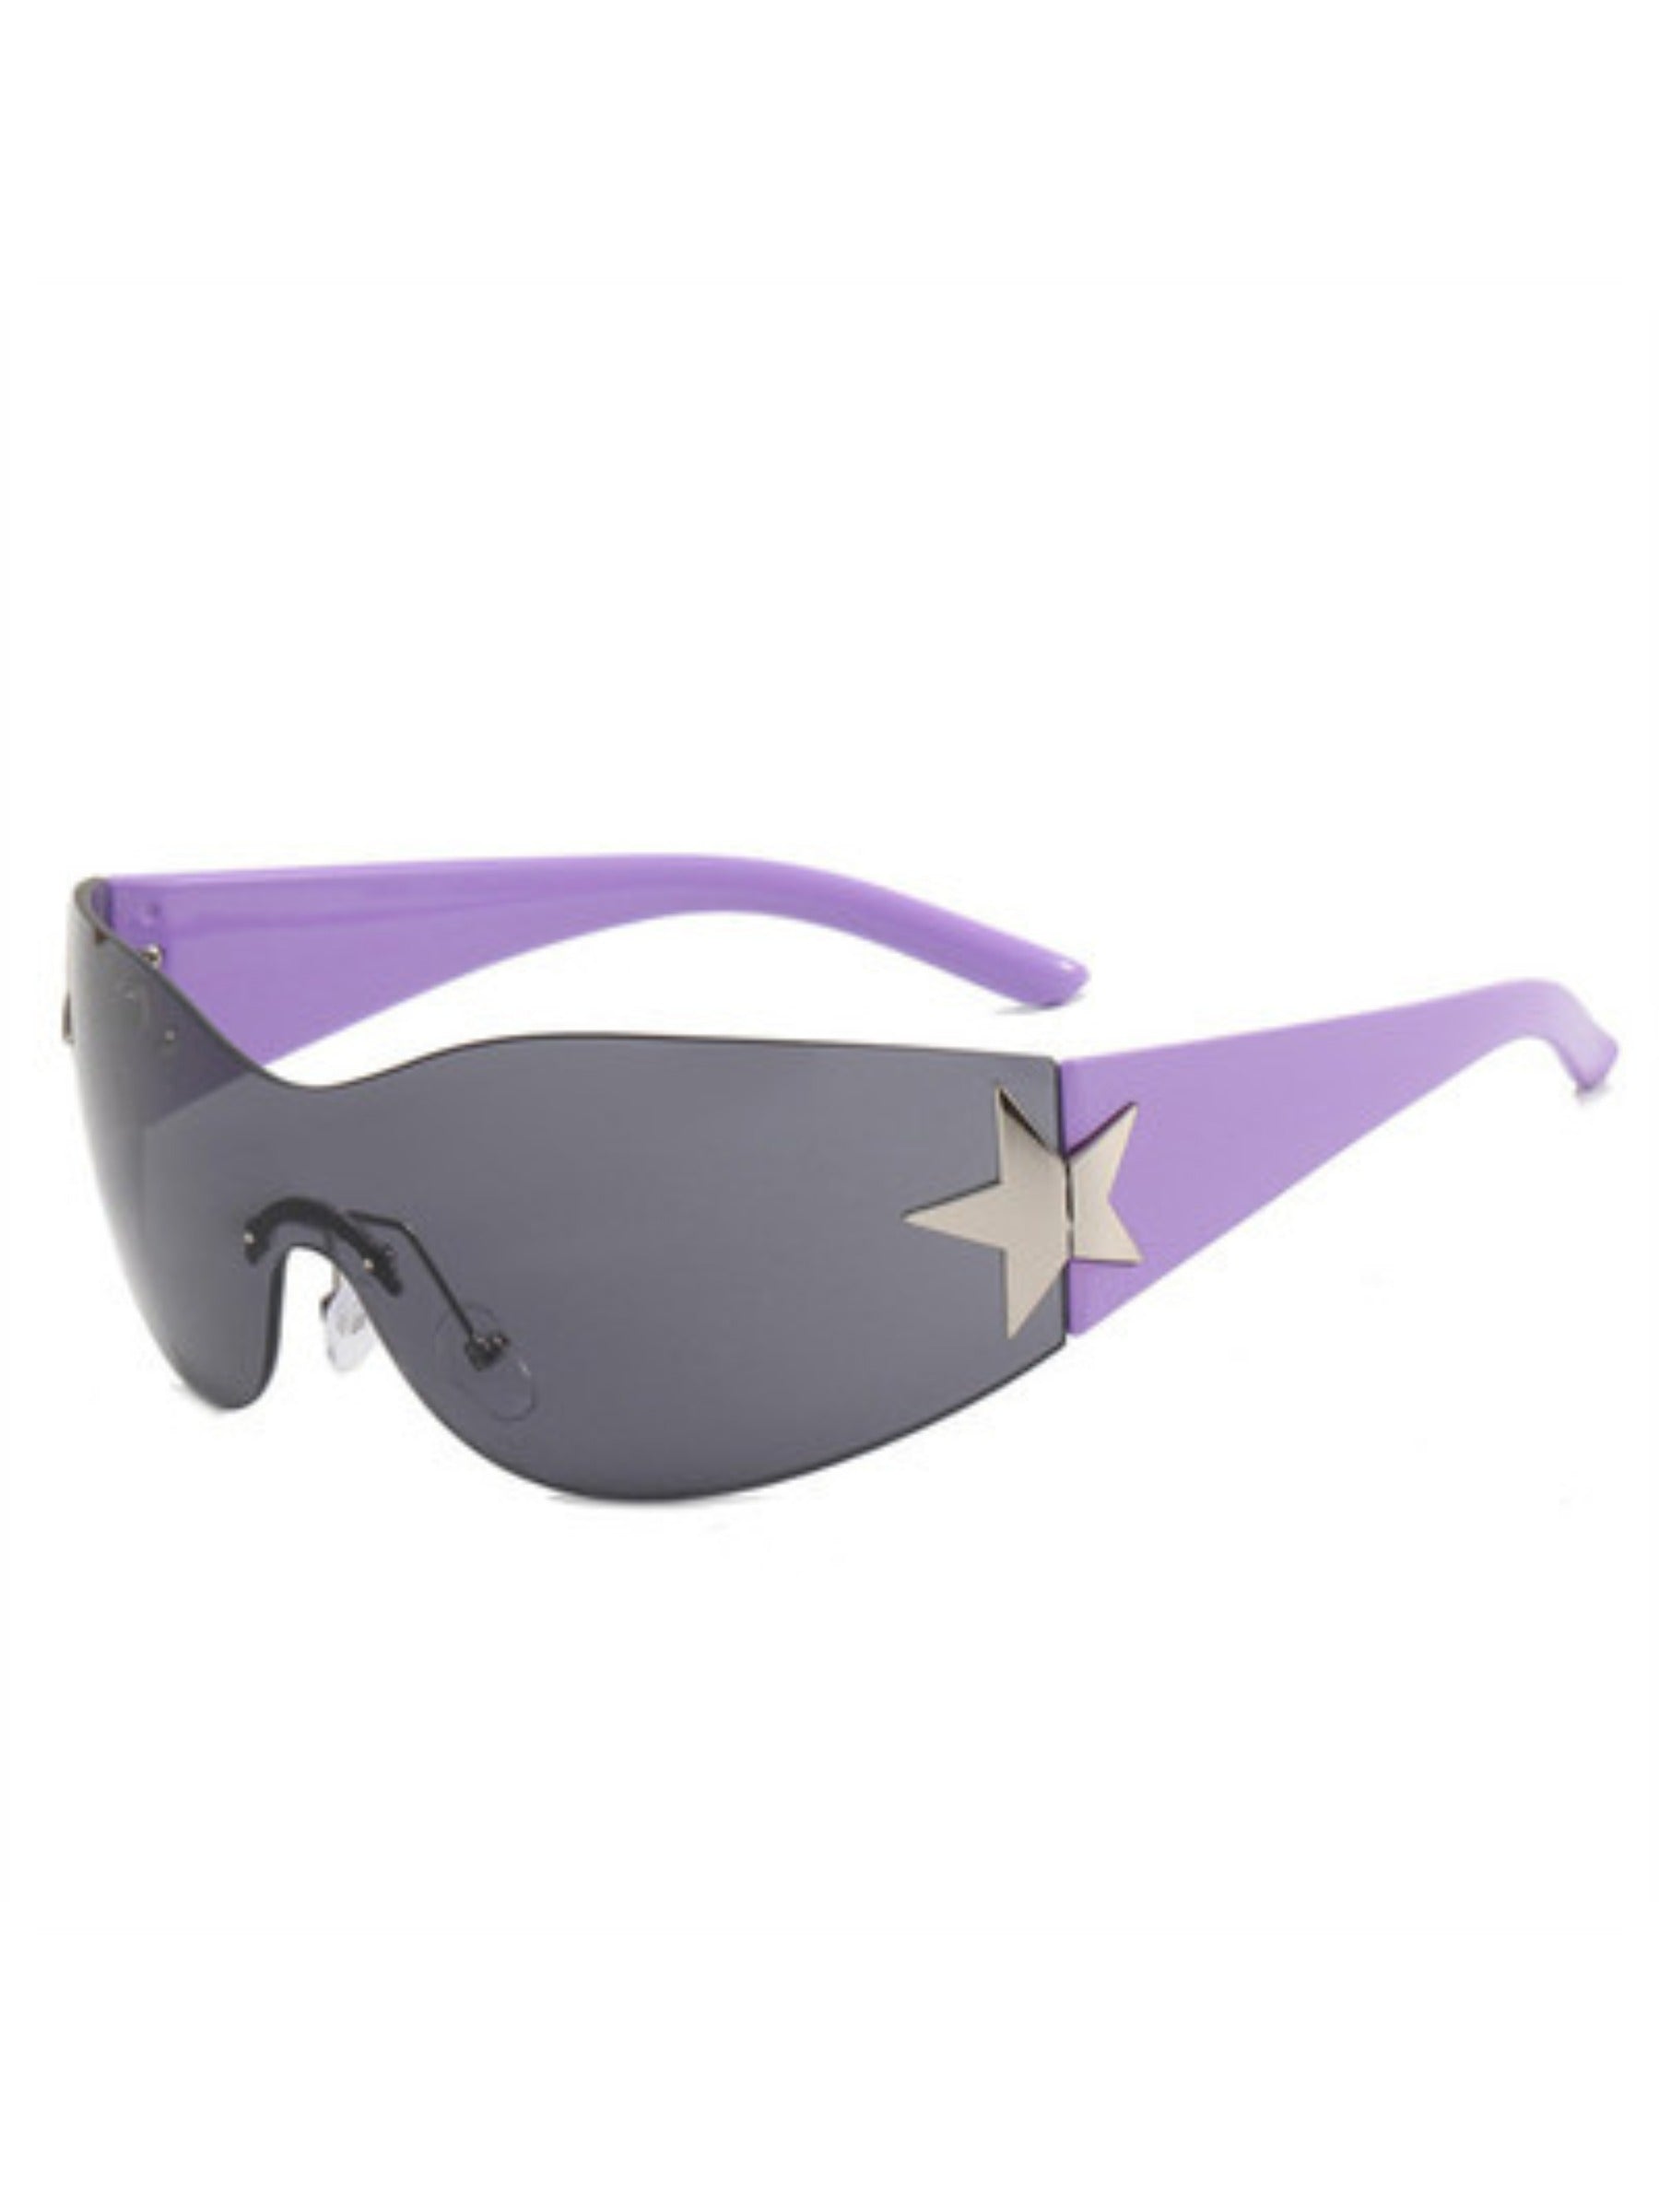 LaPose Fashion - Celestina Sunglasses - Accesories, Sunglasses